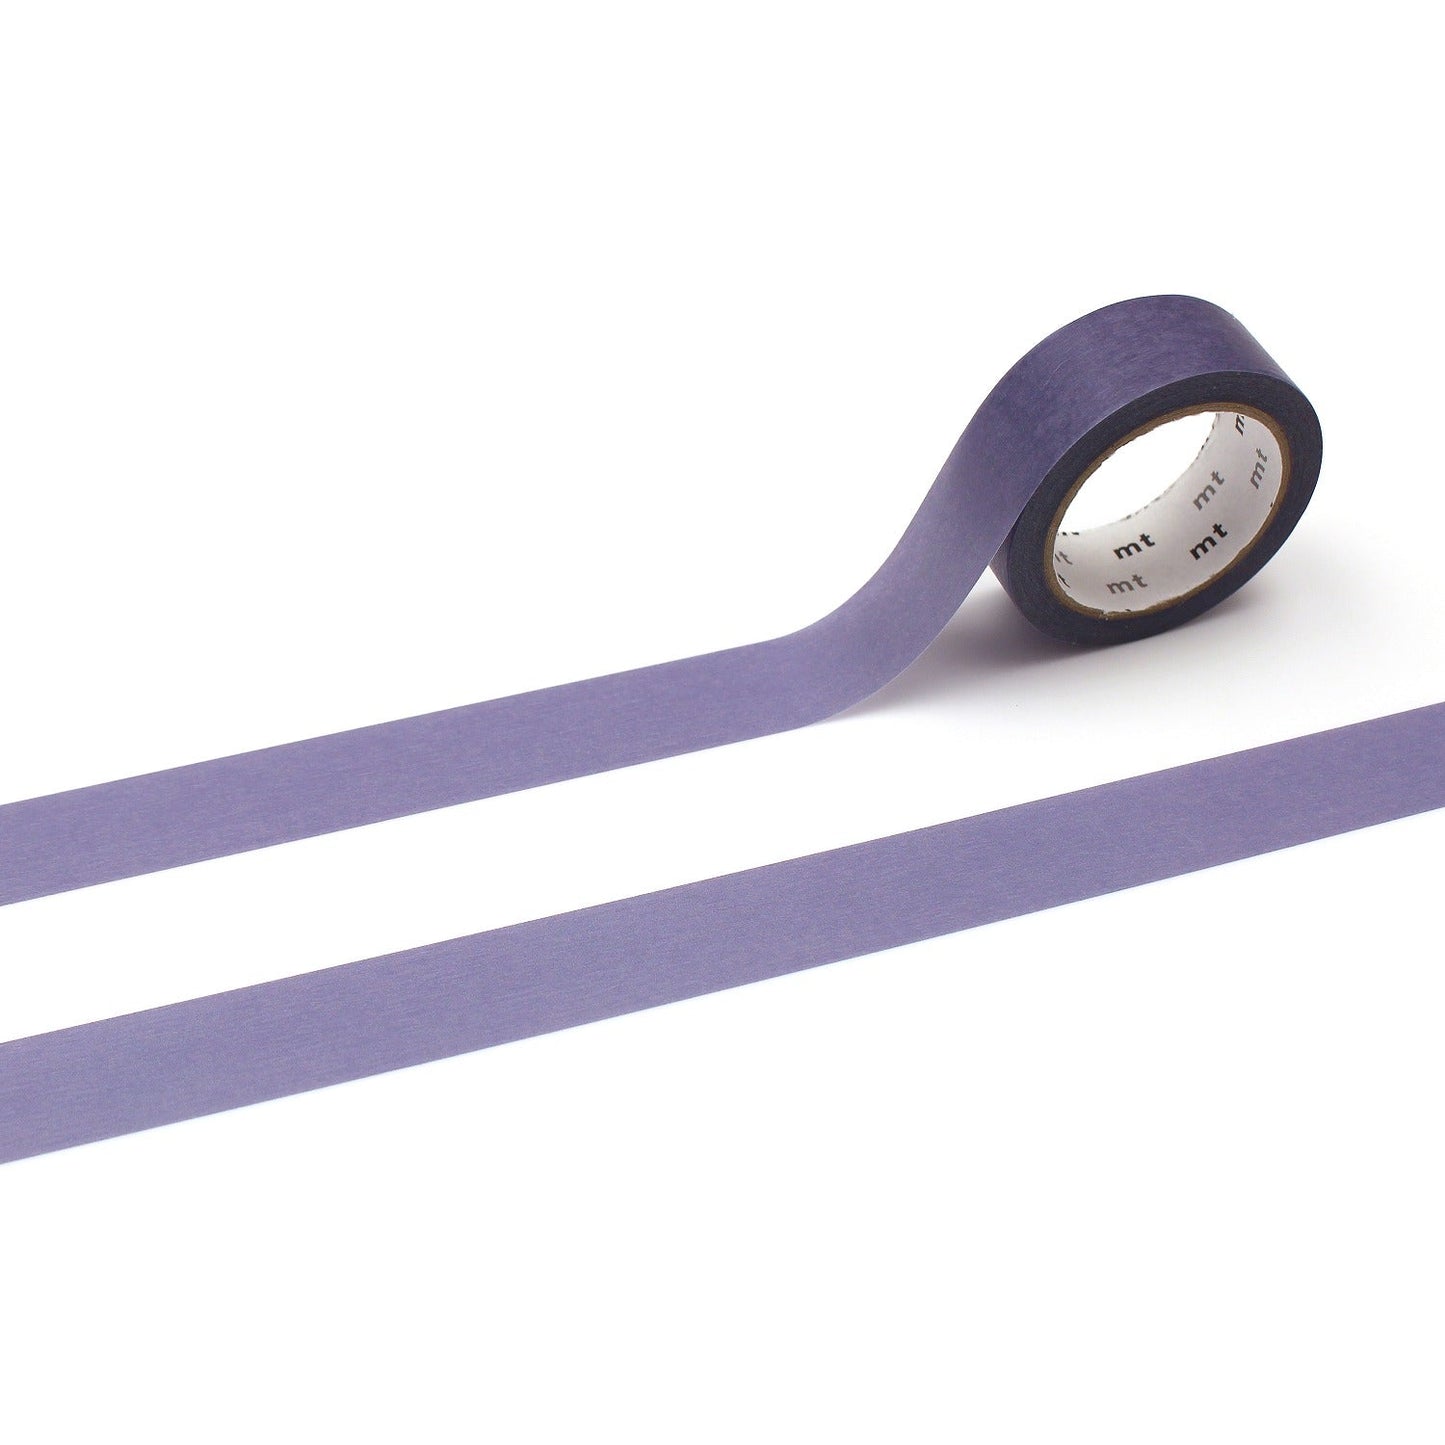 MT Basic Washi Tape - Dark Violet